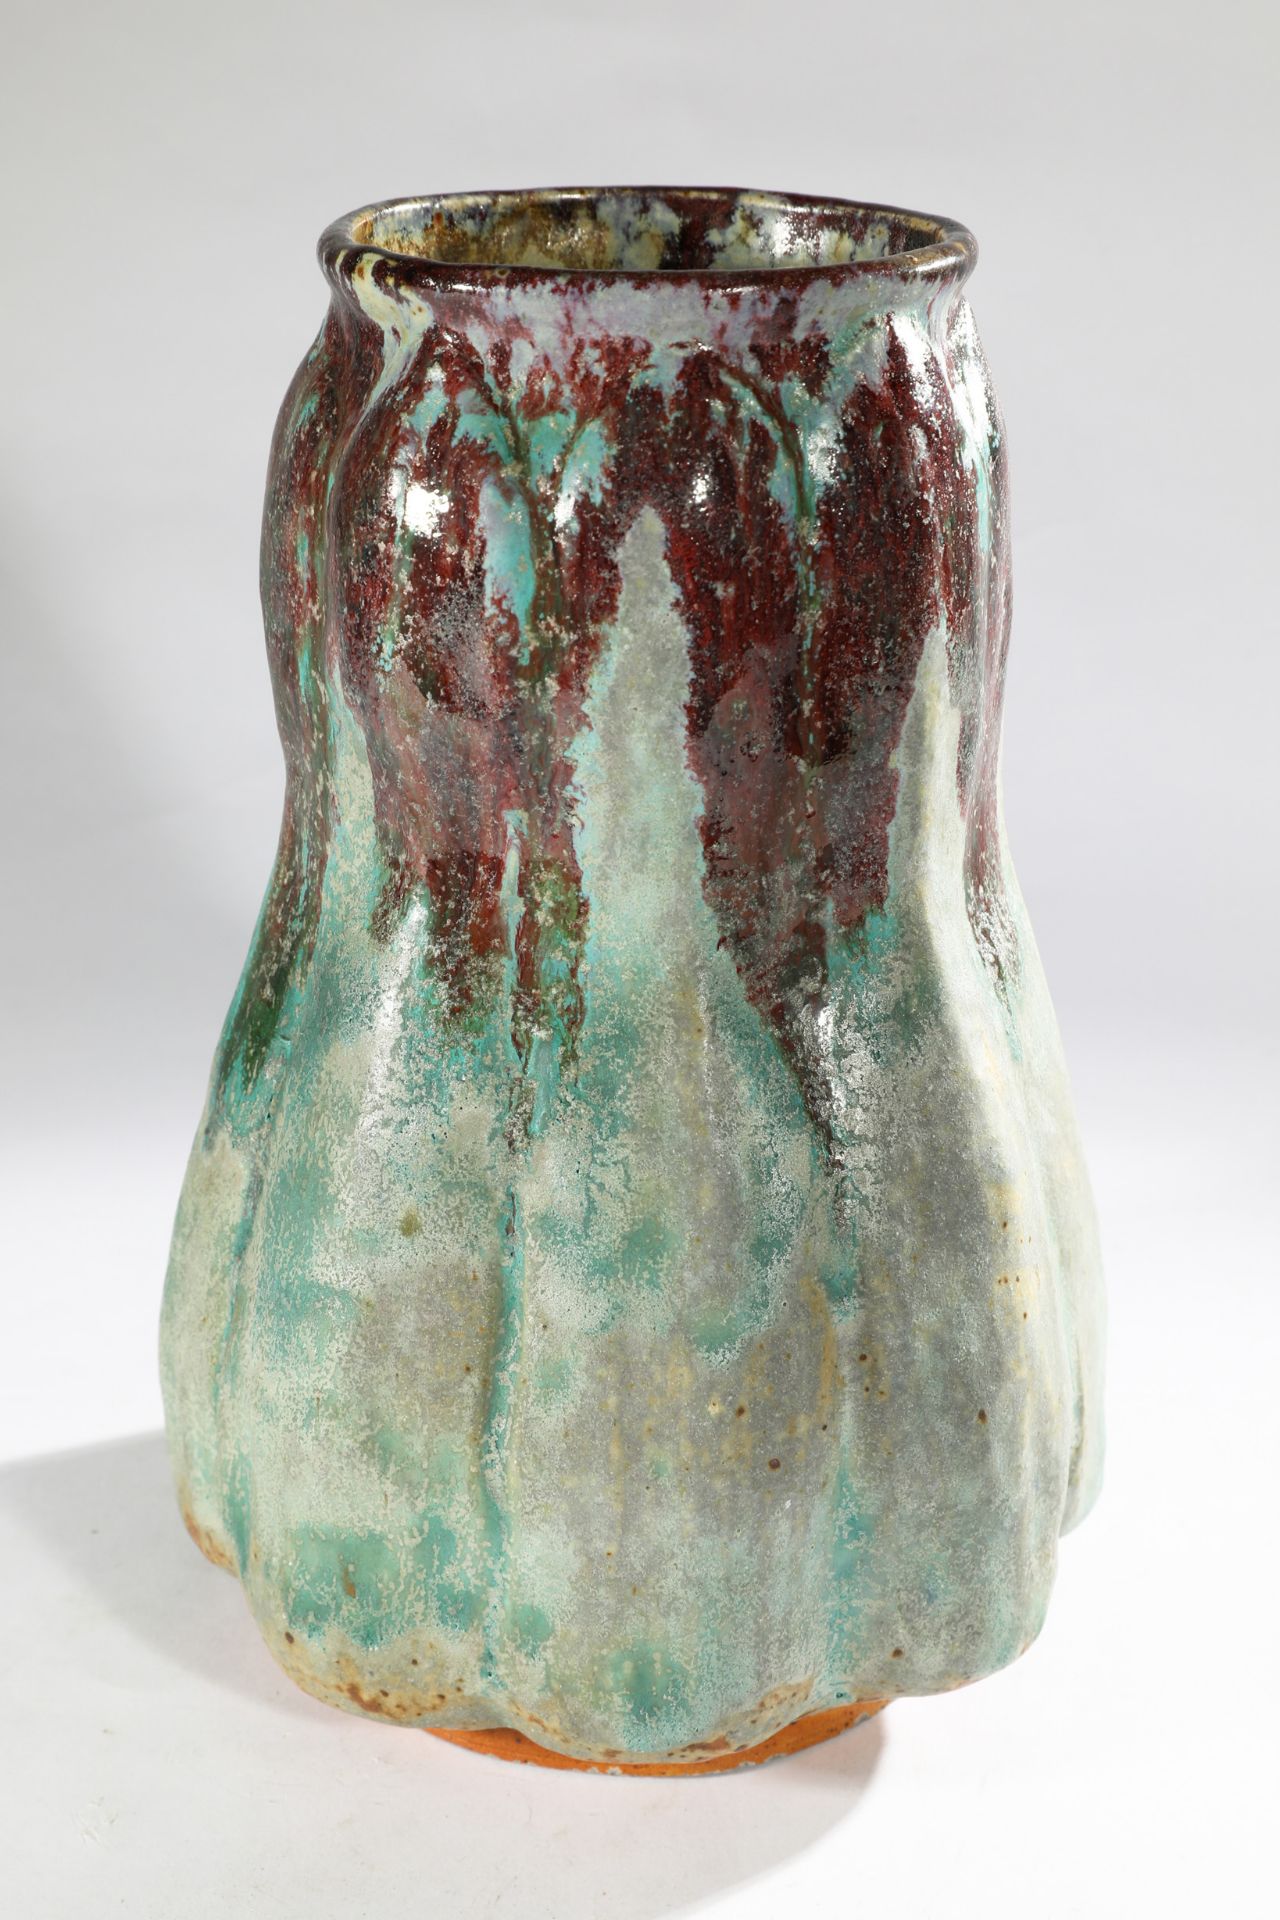 Alexandre Bigot, Oxblood and Turquoise Vase